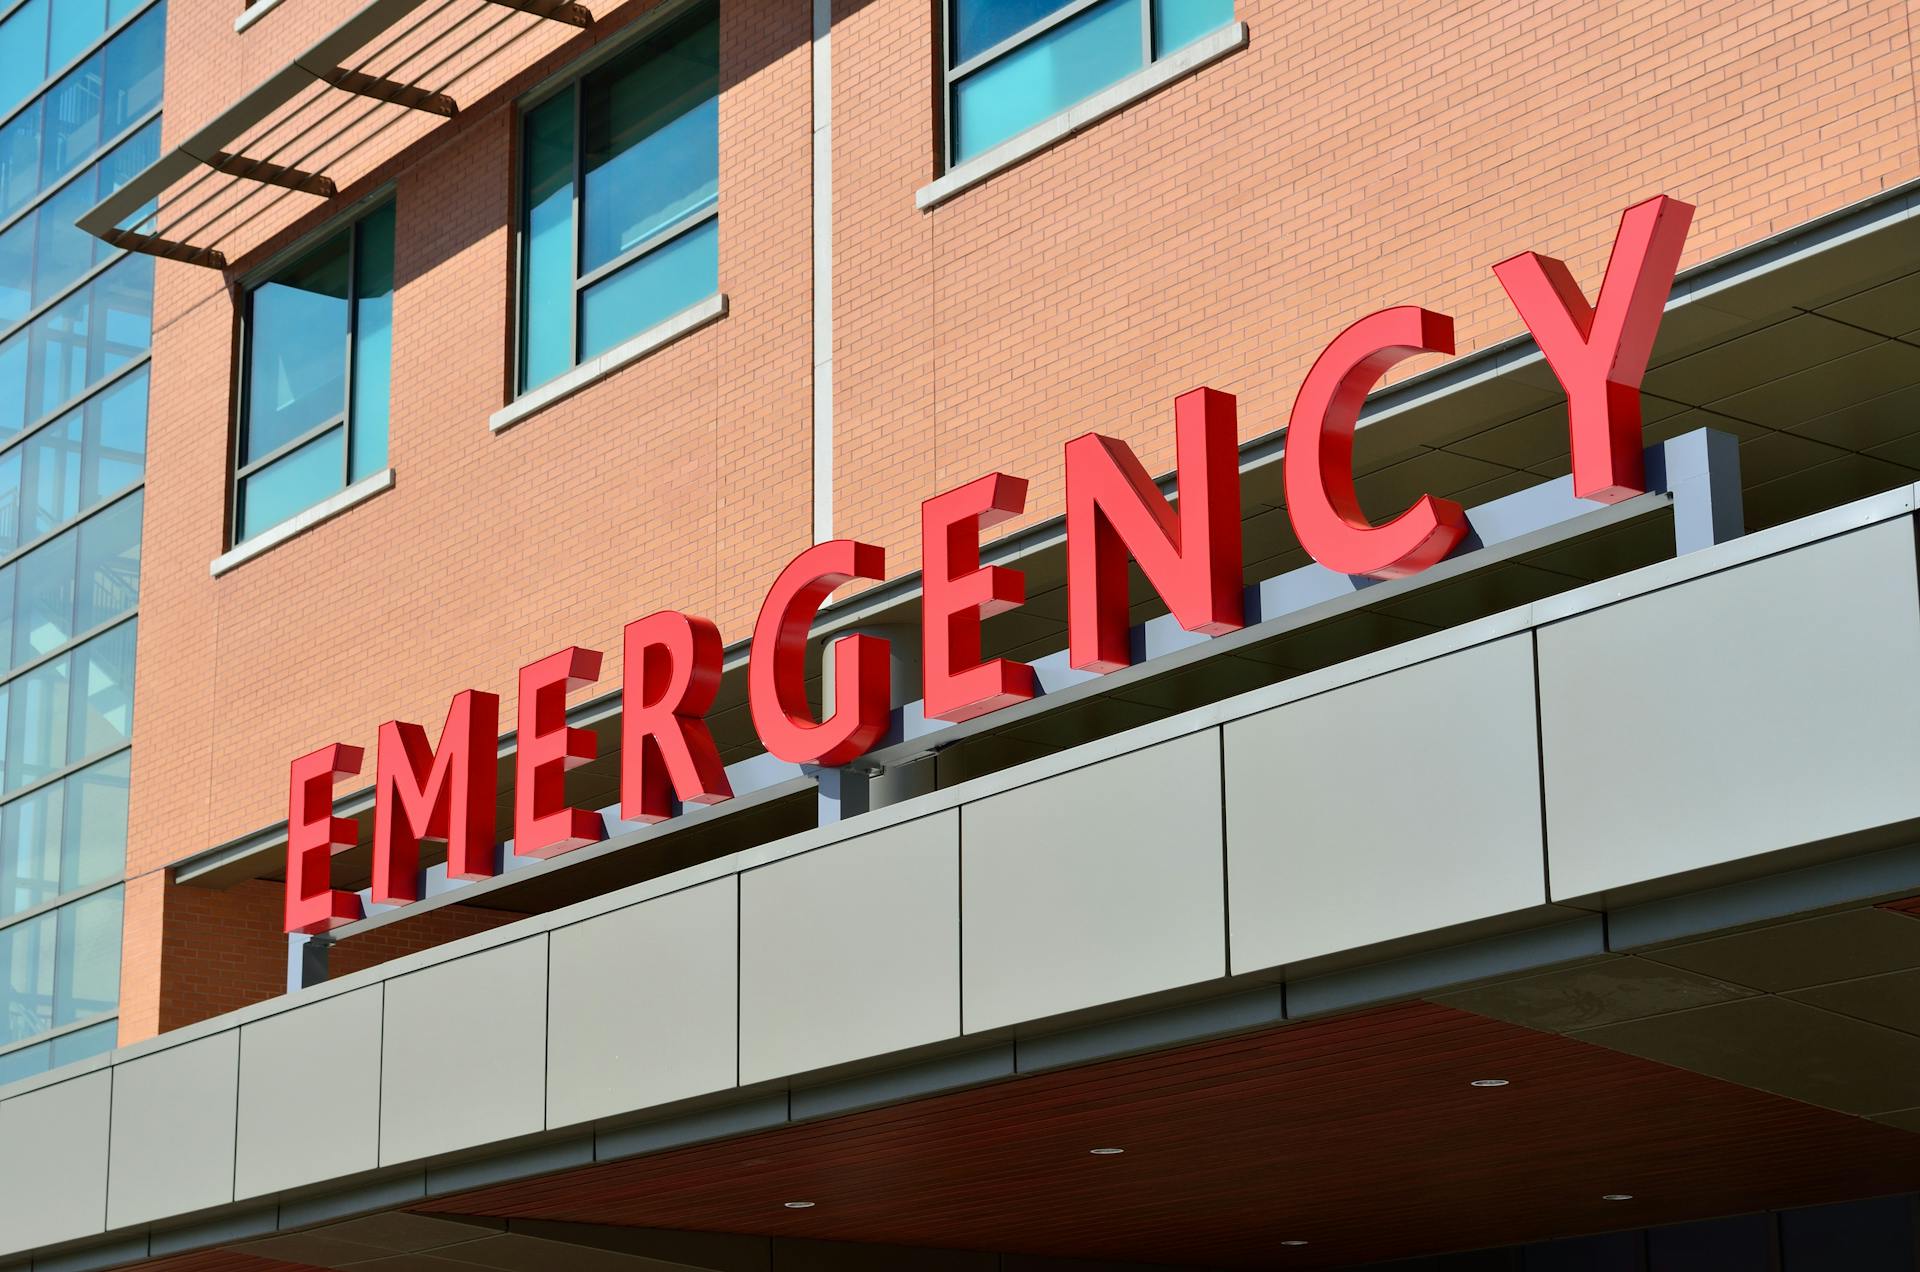 Una señal de emergencia en un hospital | Foto: Pexels